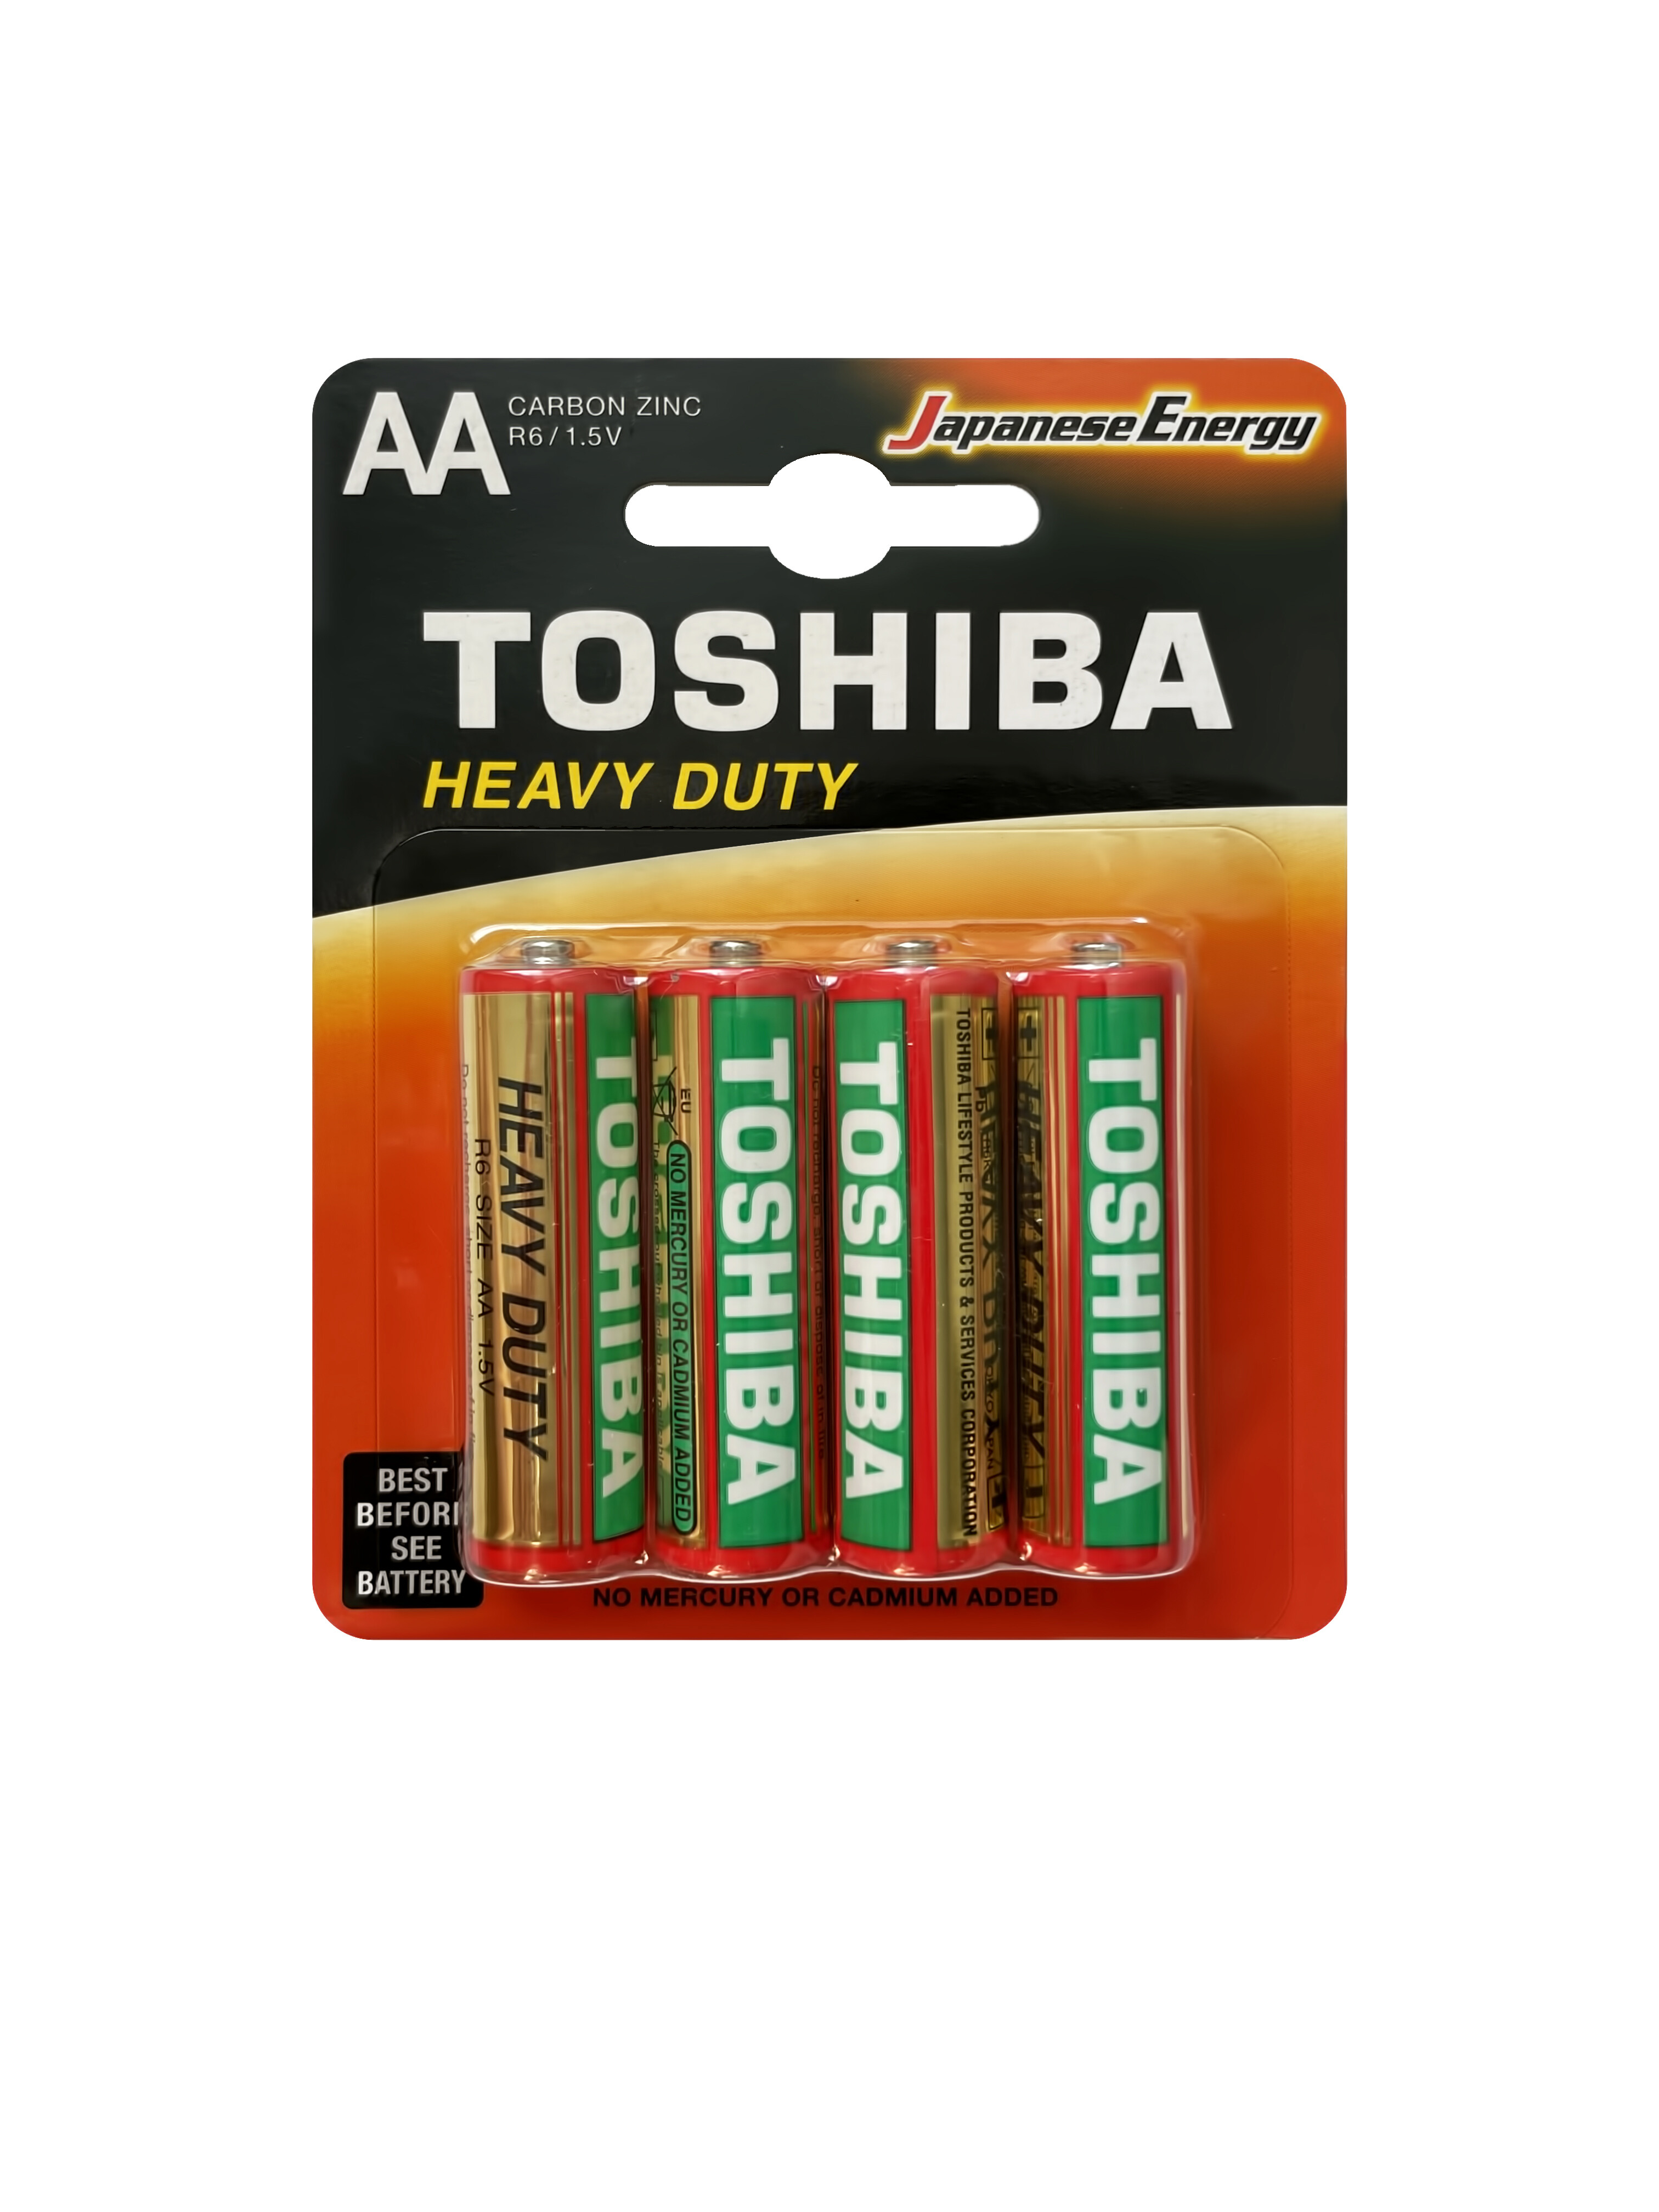 Батарейки Toshiba R6 солевые (zinc) ПАЛЬЧИК Heavy Duty (4шт) AA 1,5V батарейки toshiba lr6 щелочные alkaline пальчик high power 12шт aa 1 5v